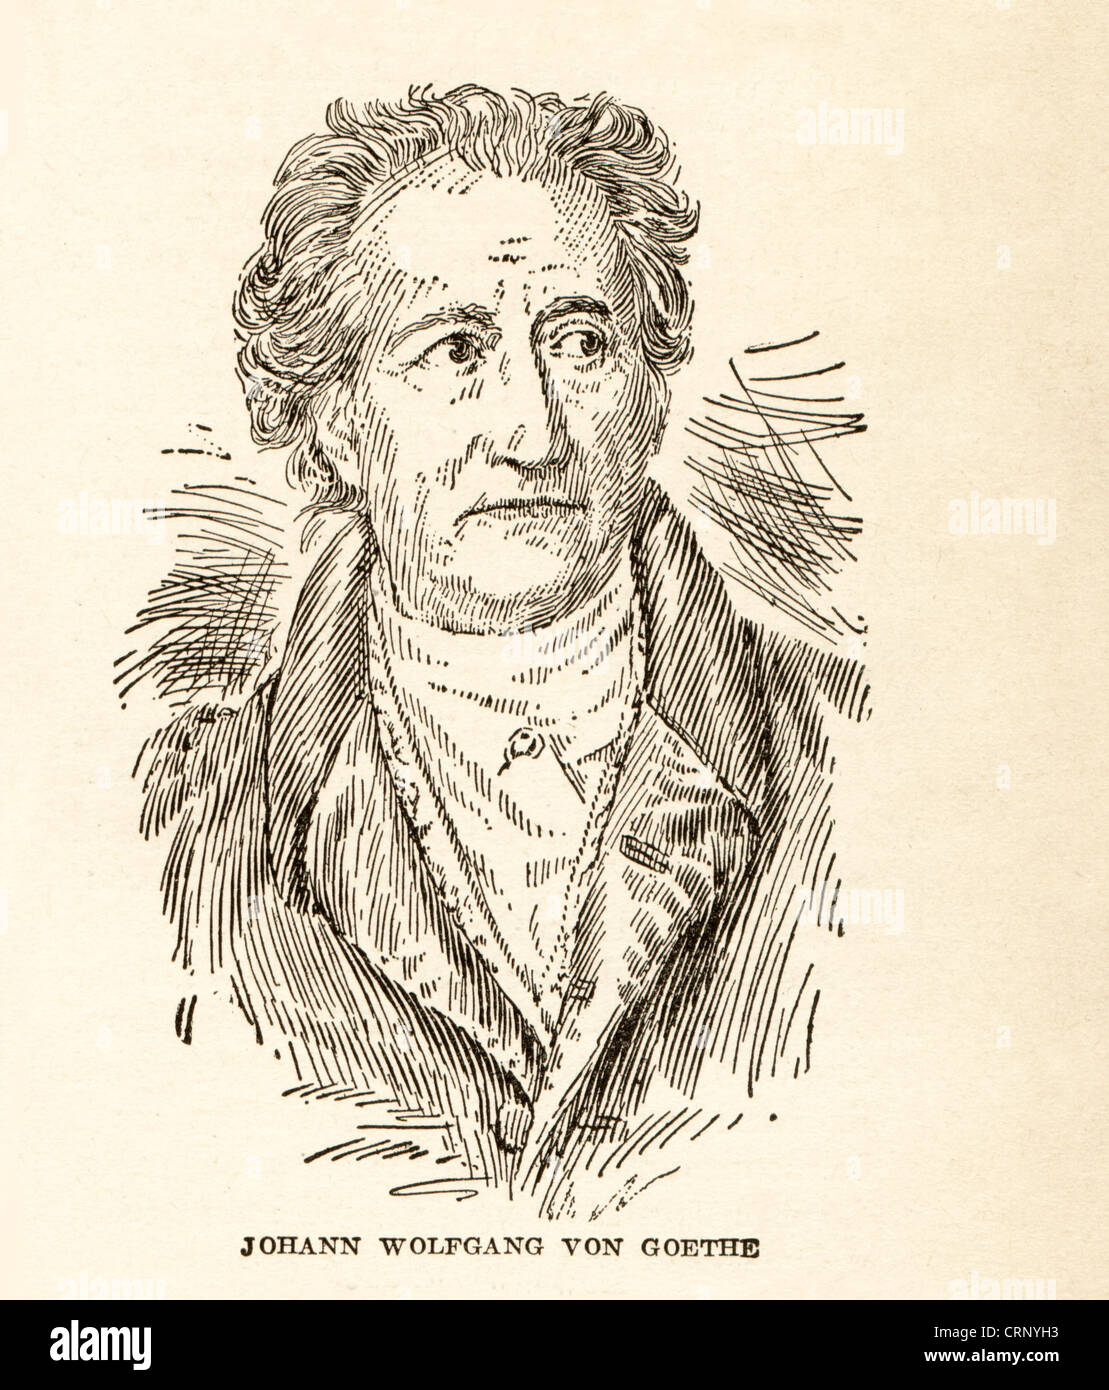 Vintage engraving of Johann Wolfgang von Goethe,1749-1832, poet, author. Stock Photo